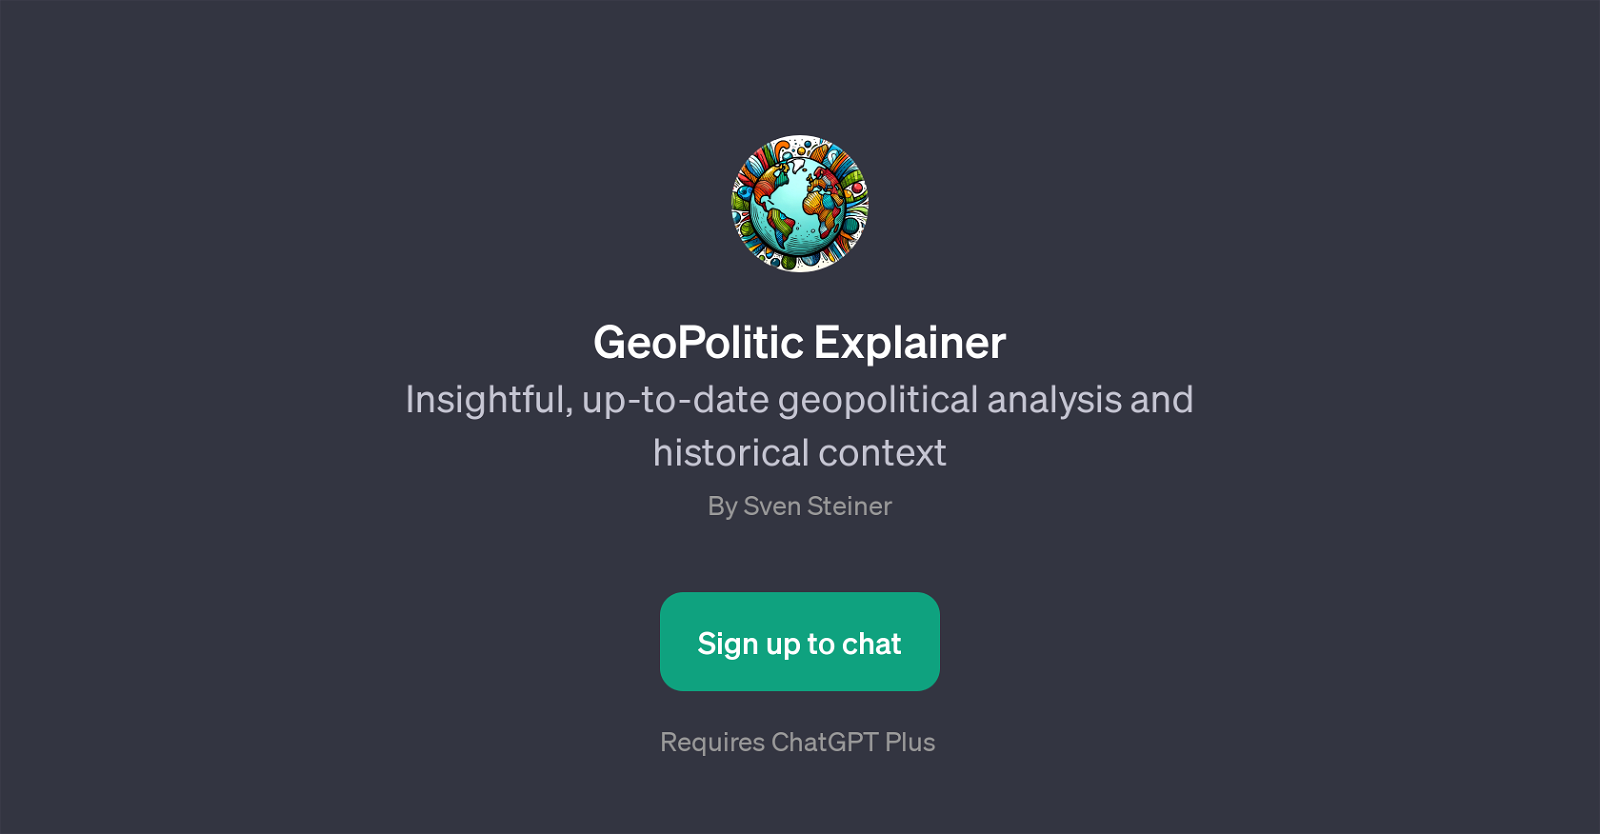 GeoPolitic Explainer website